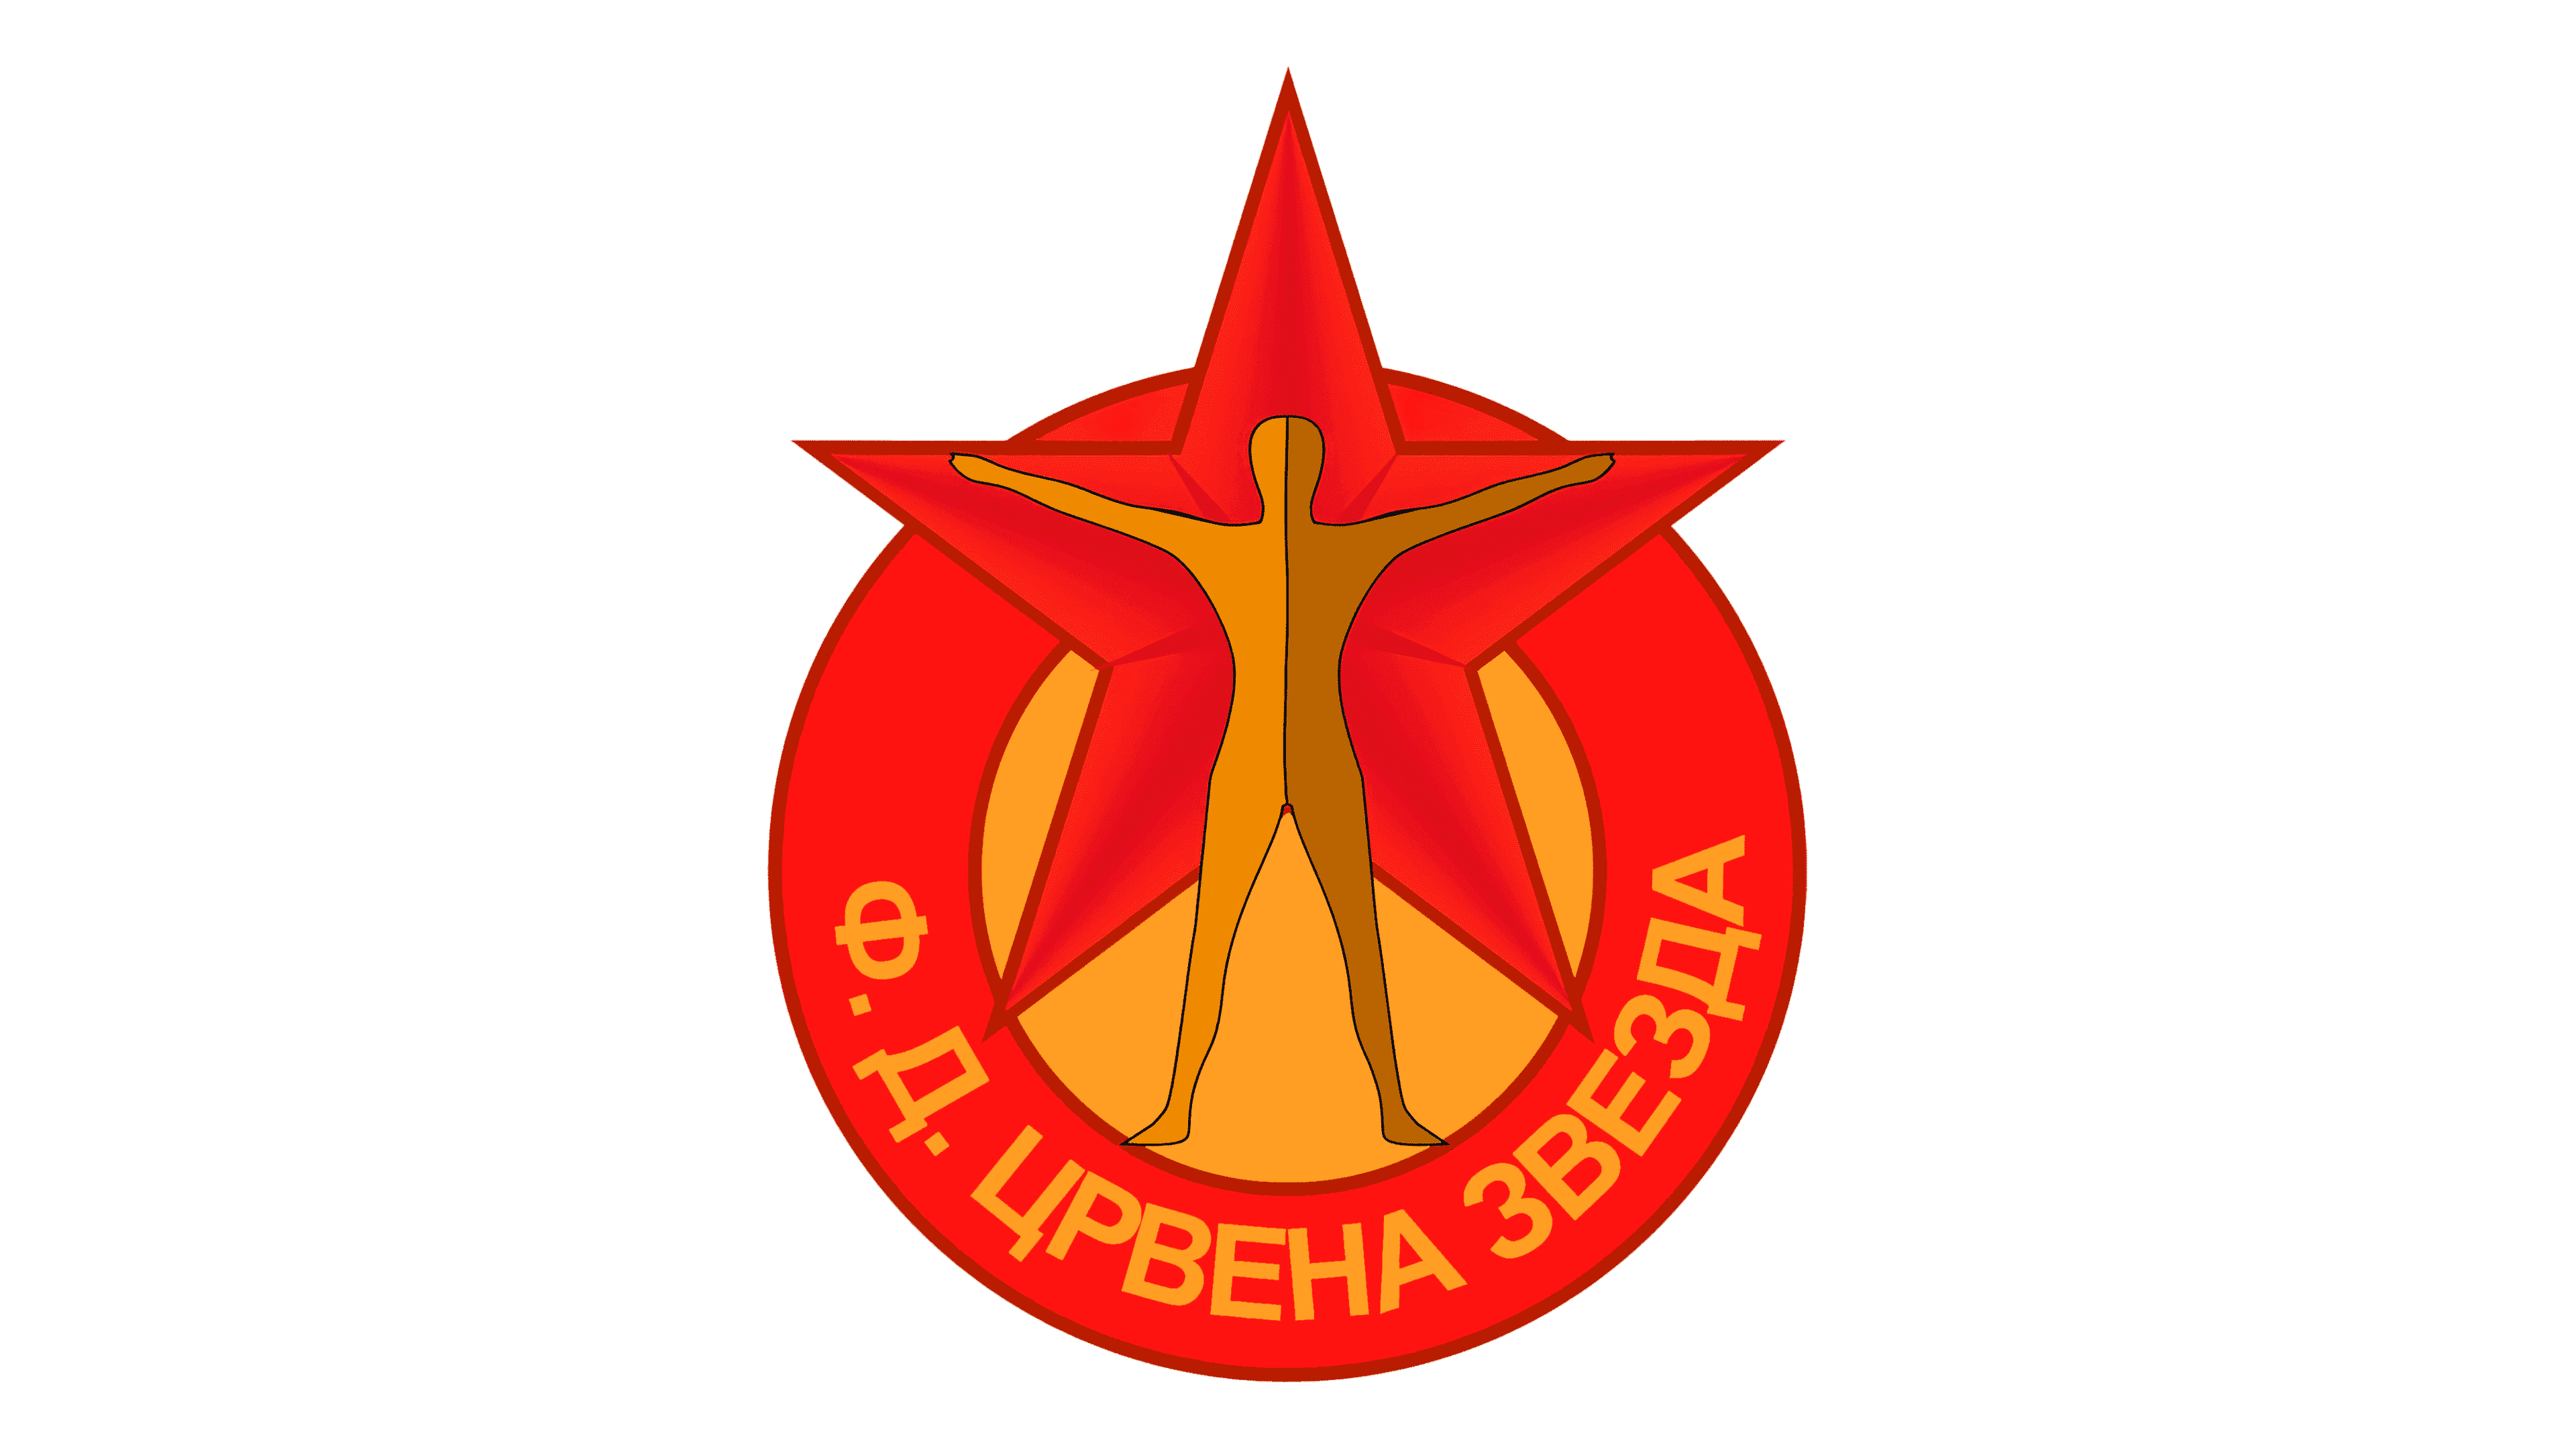 Crvena zvezda – a Symbol of Invincibility and Unity - P-portal